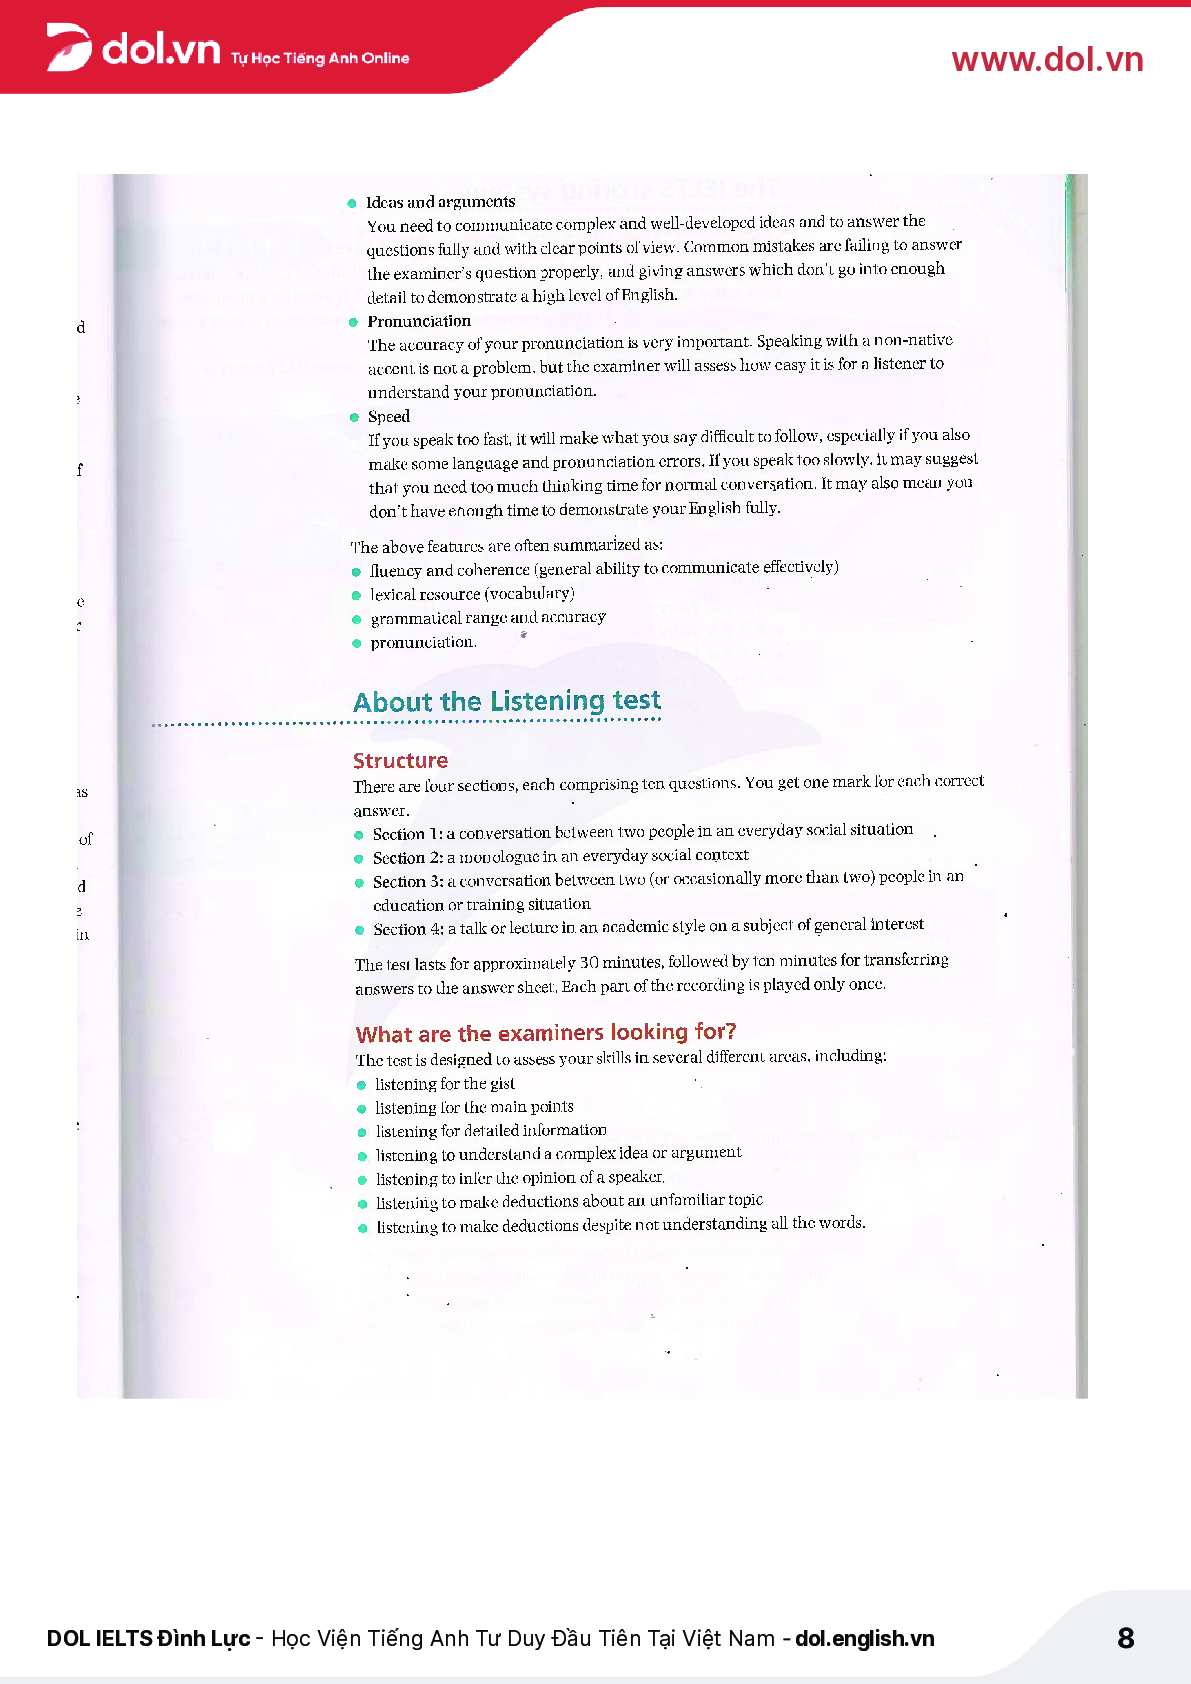 Sách IELTS Advantage Speaking & Listening Skills pdf | Xem online, tải PDF miễn phí (trang 8)